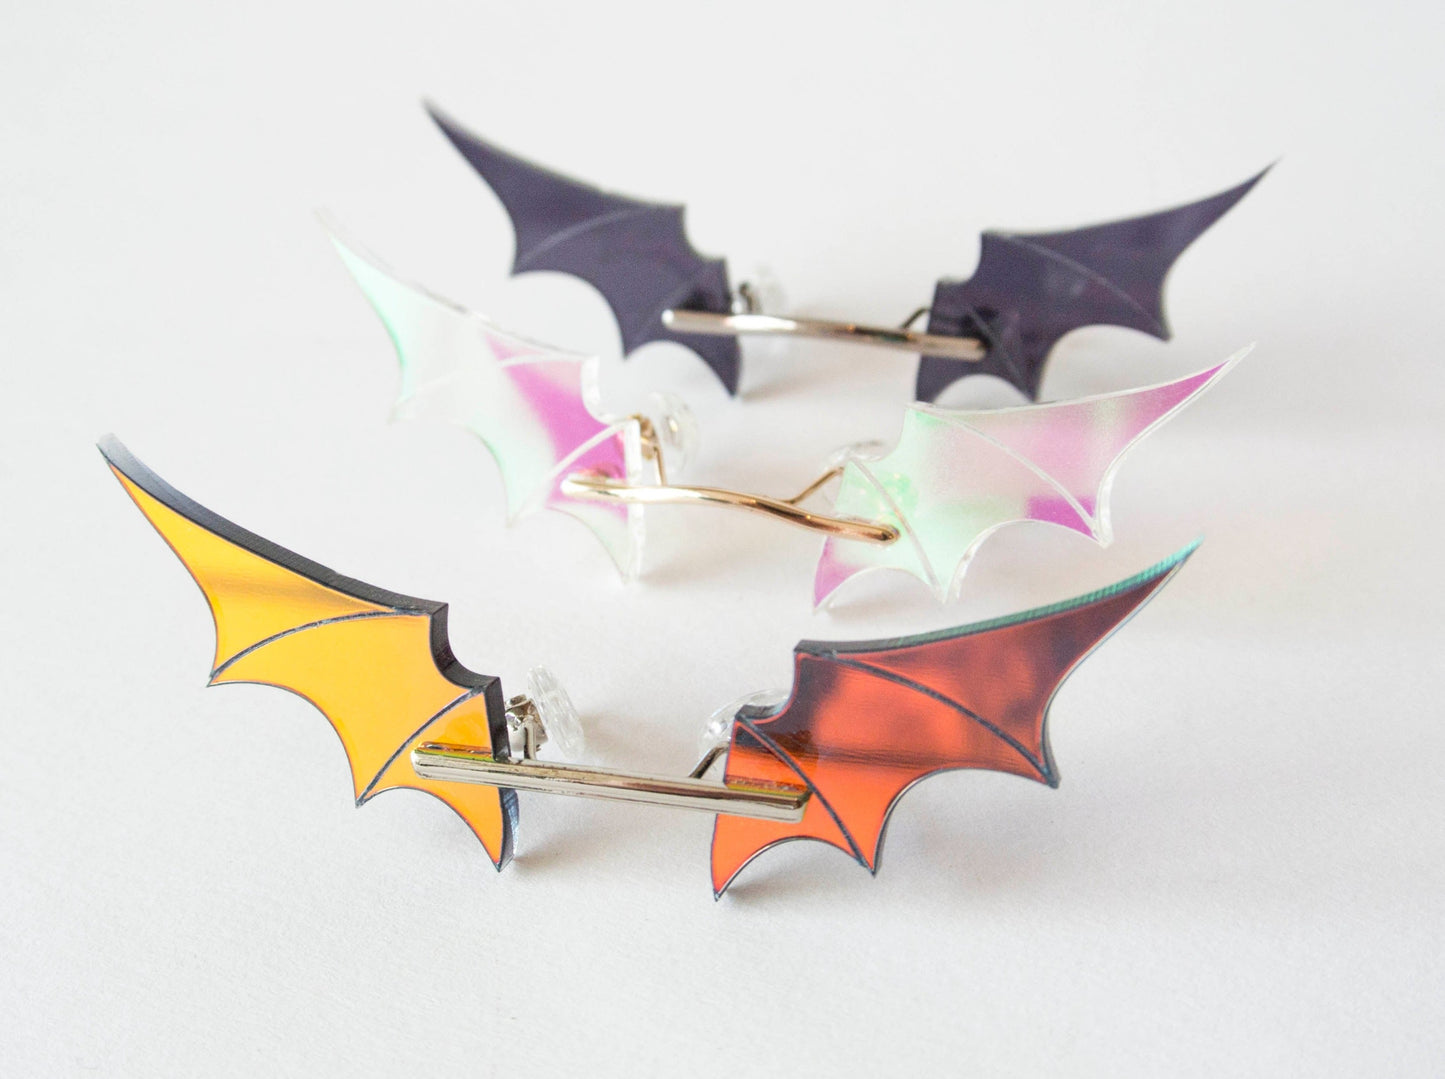 3 pairs of bat wing shaped pince nez eyewear by designer Anna Mulhearn for Animalhair